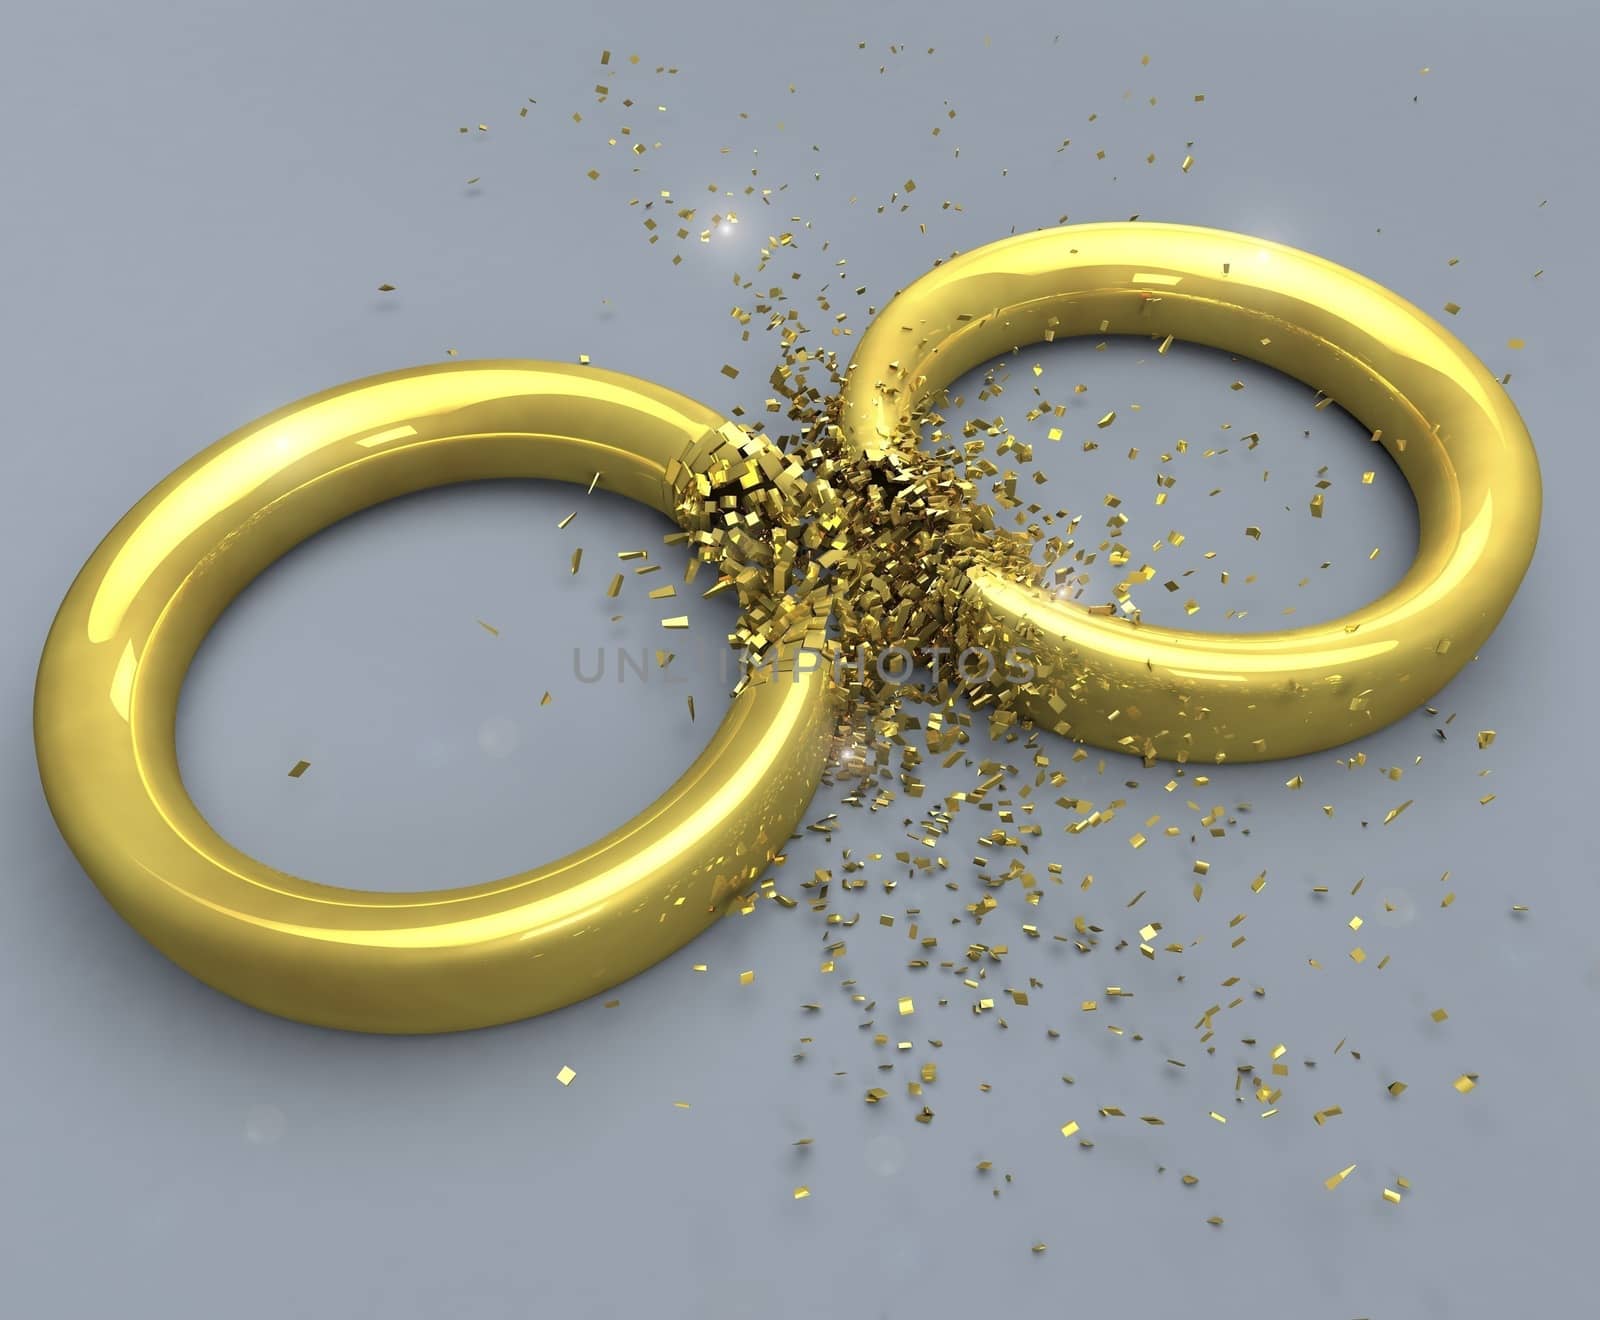 Exploding rings by Onigiristudio